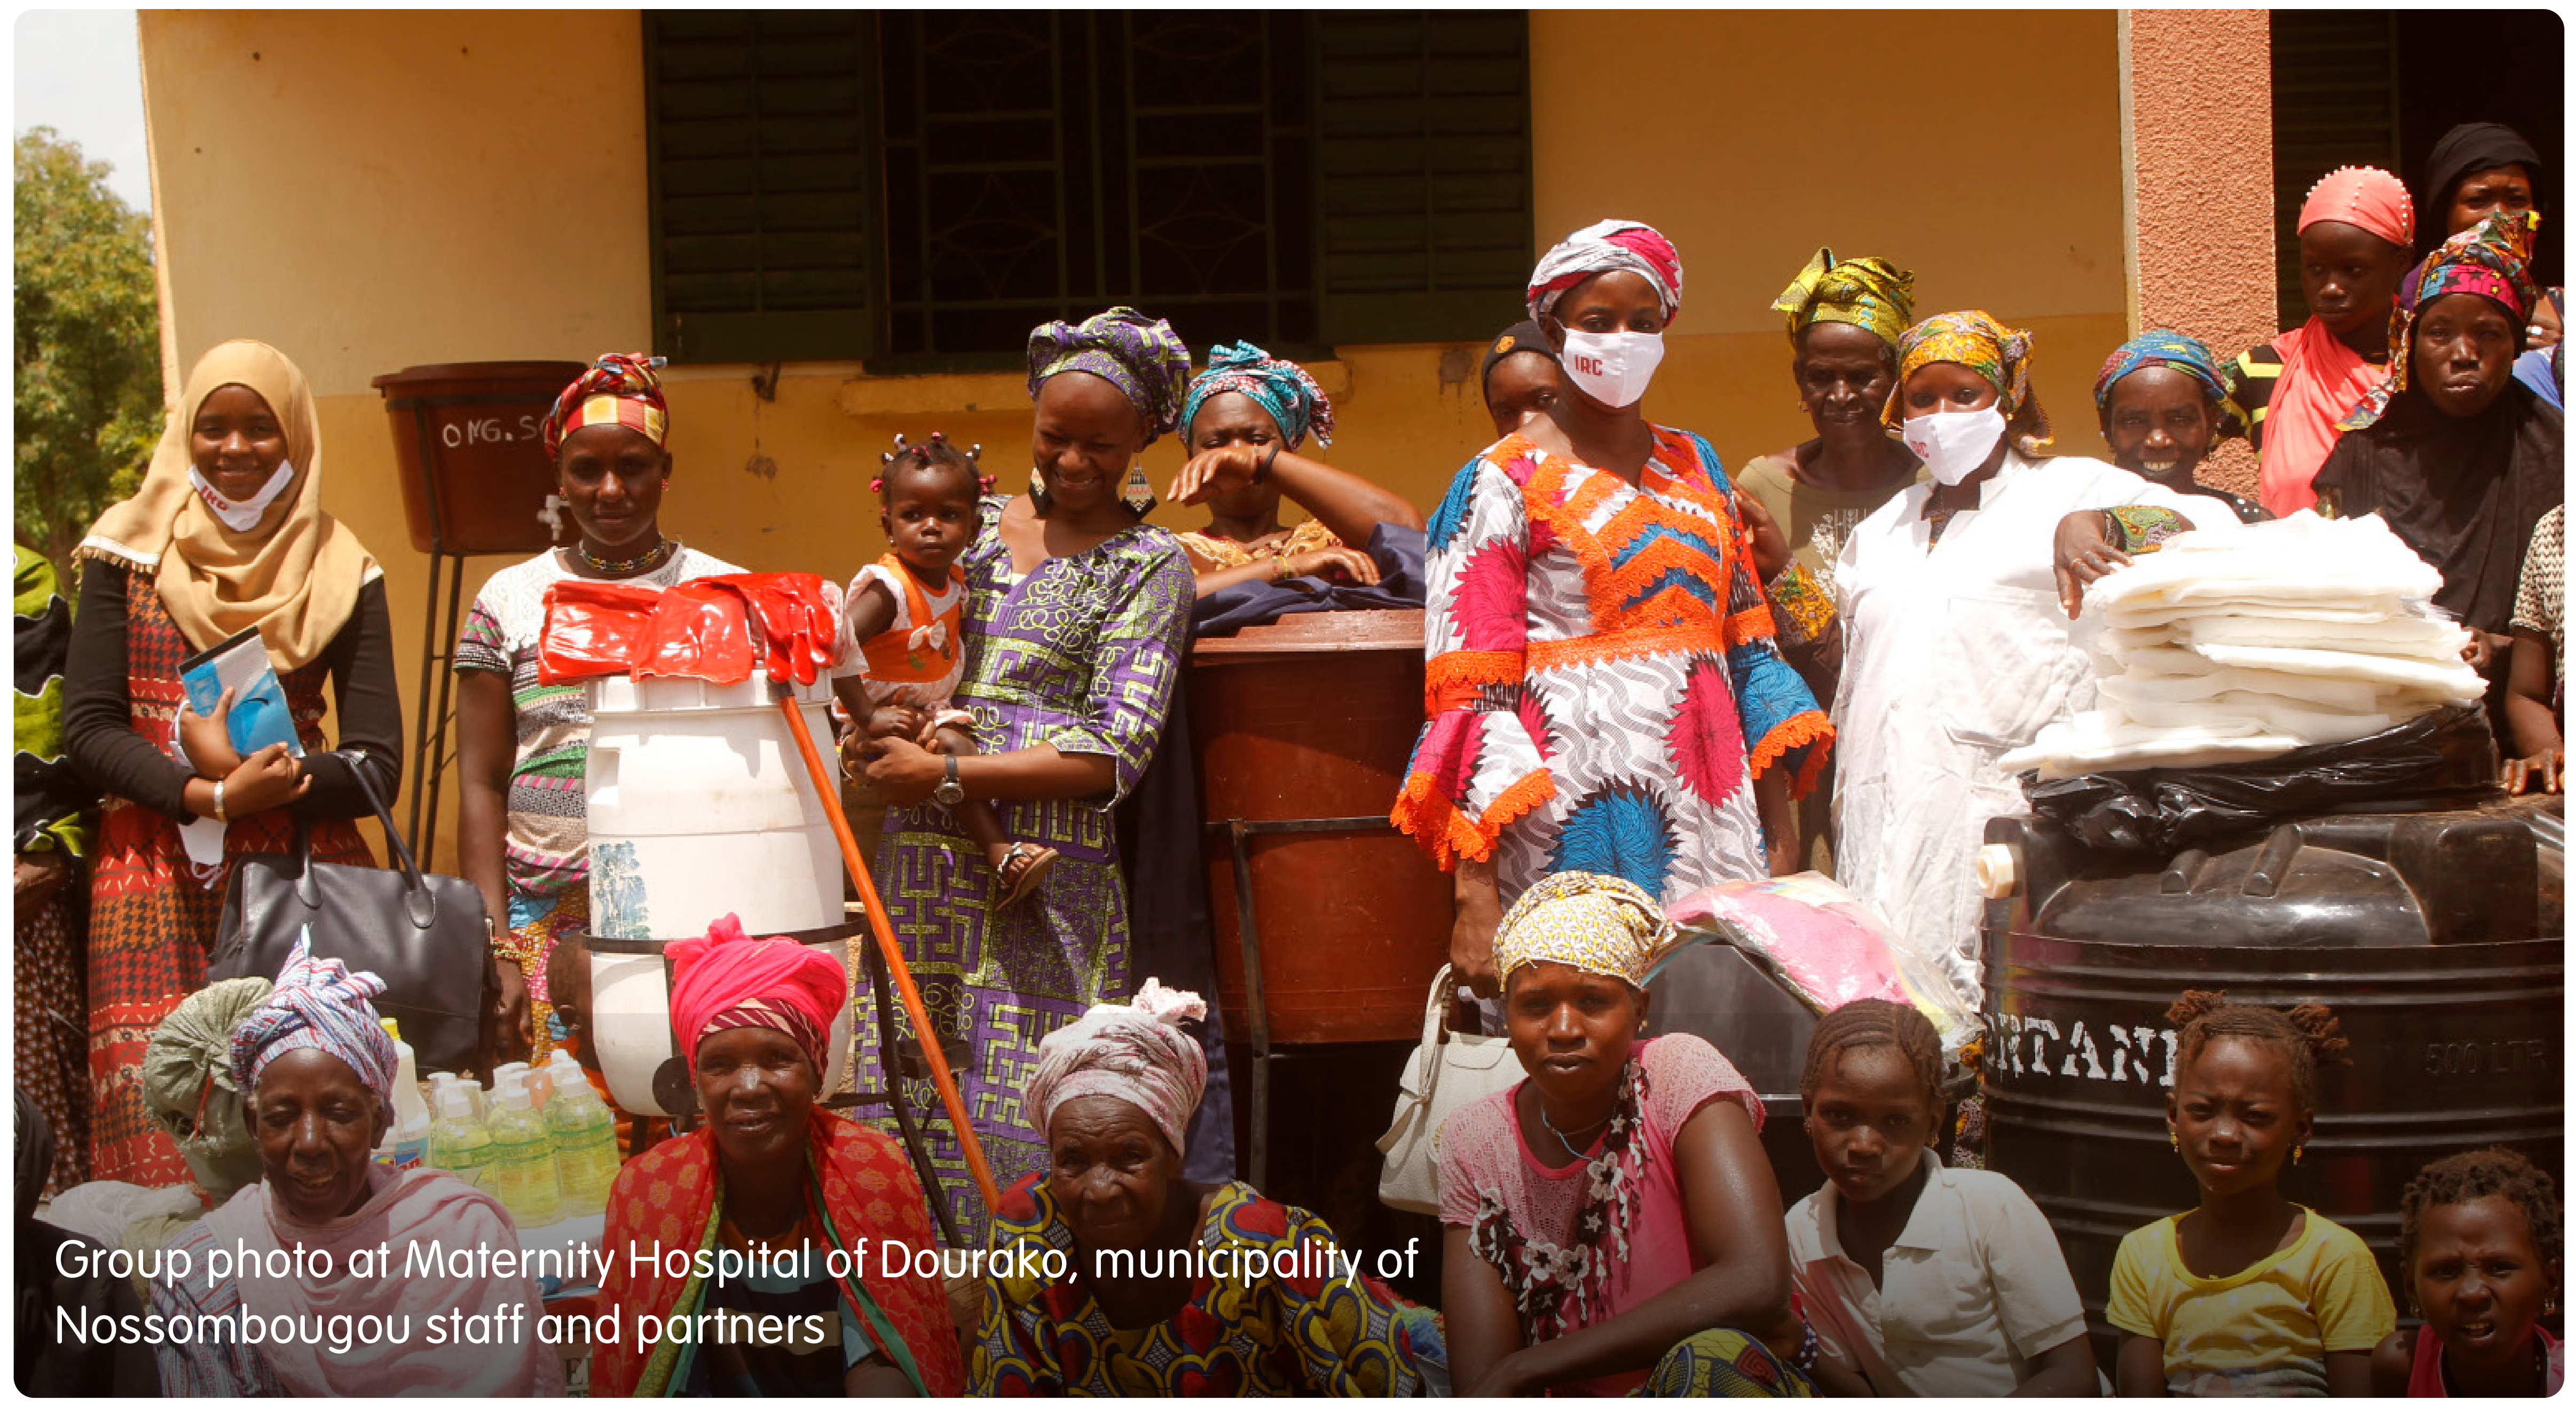 Group photo at Maternity Hospital of Dourako, municipality of Nossombougou staff and partners